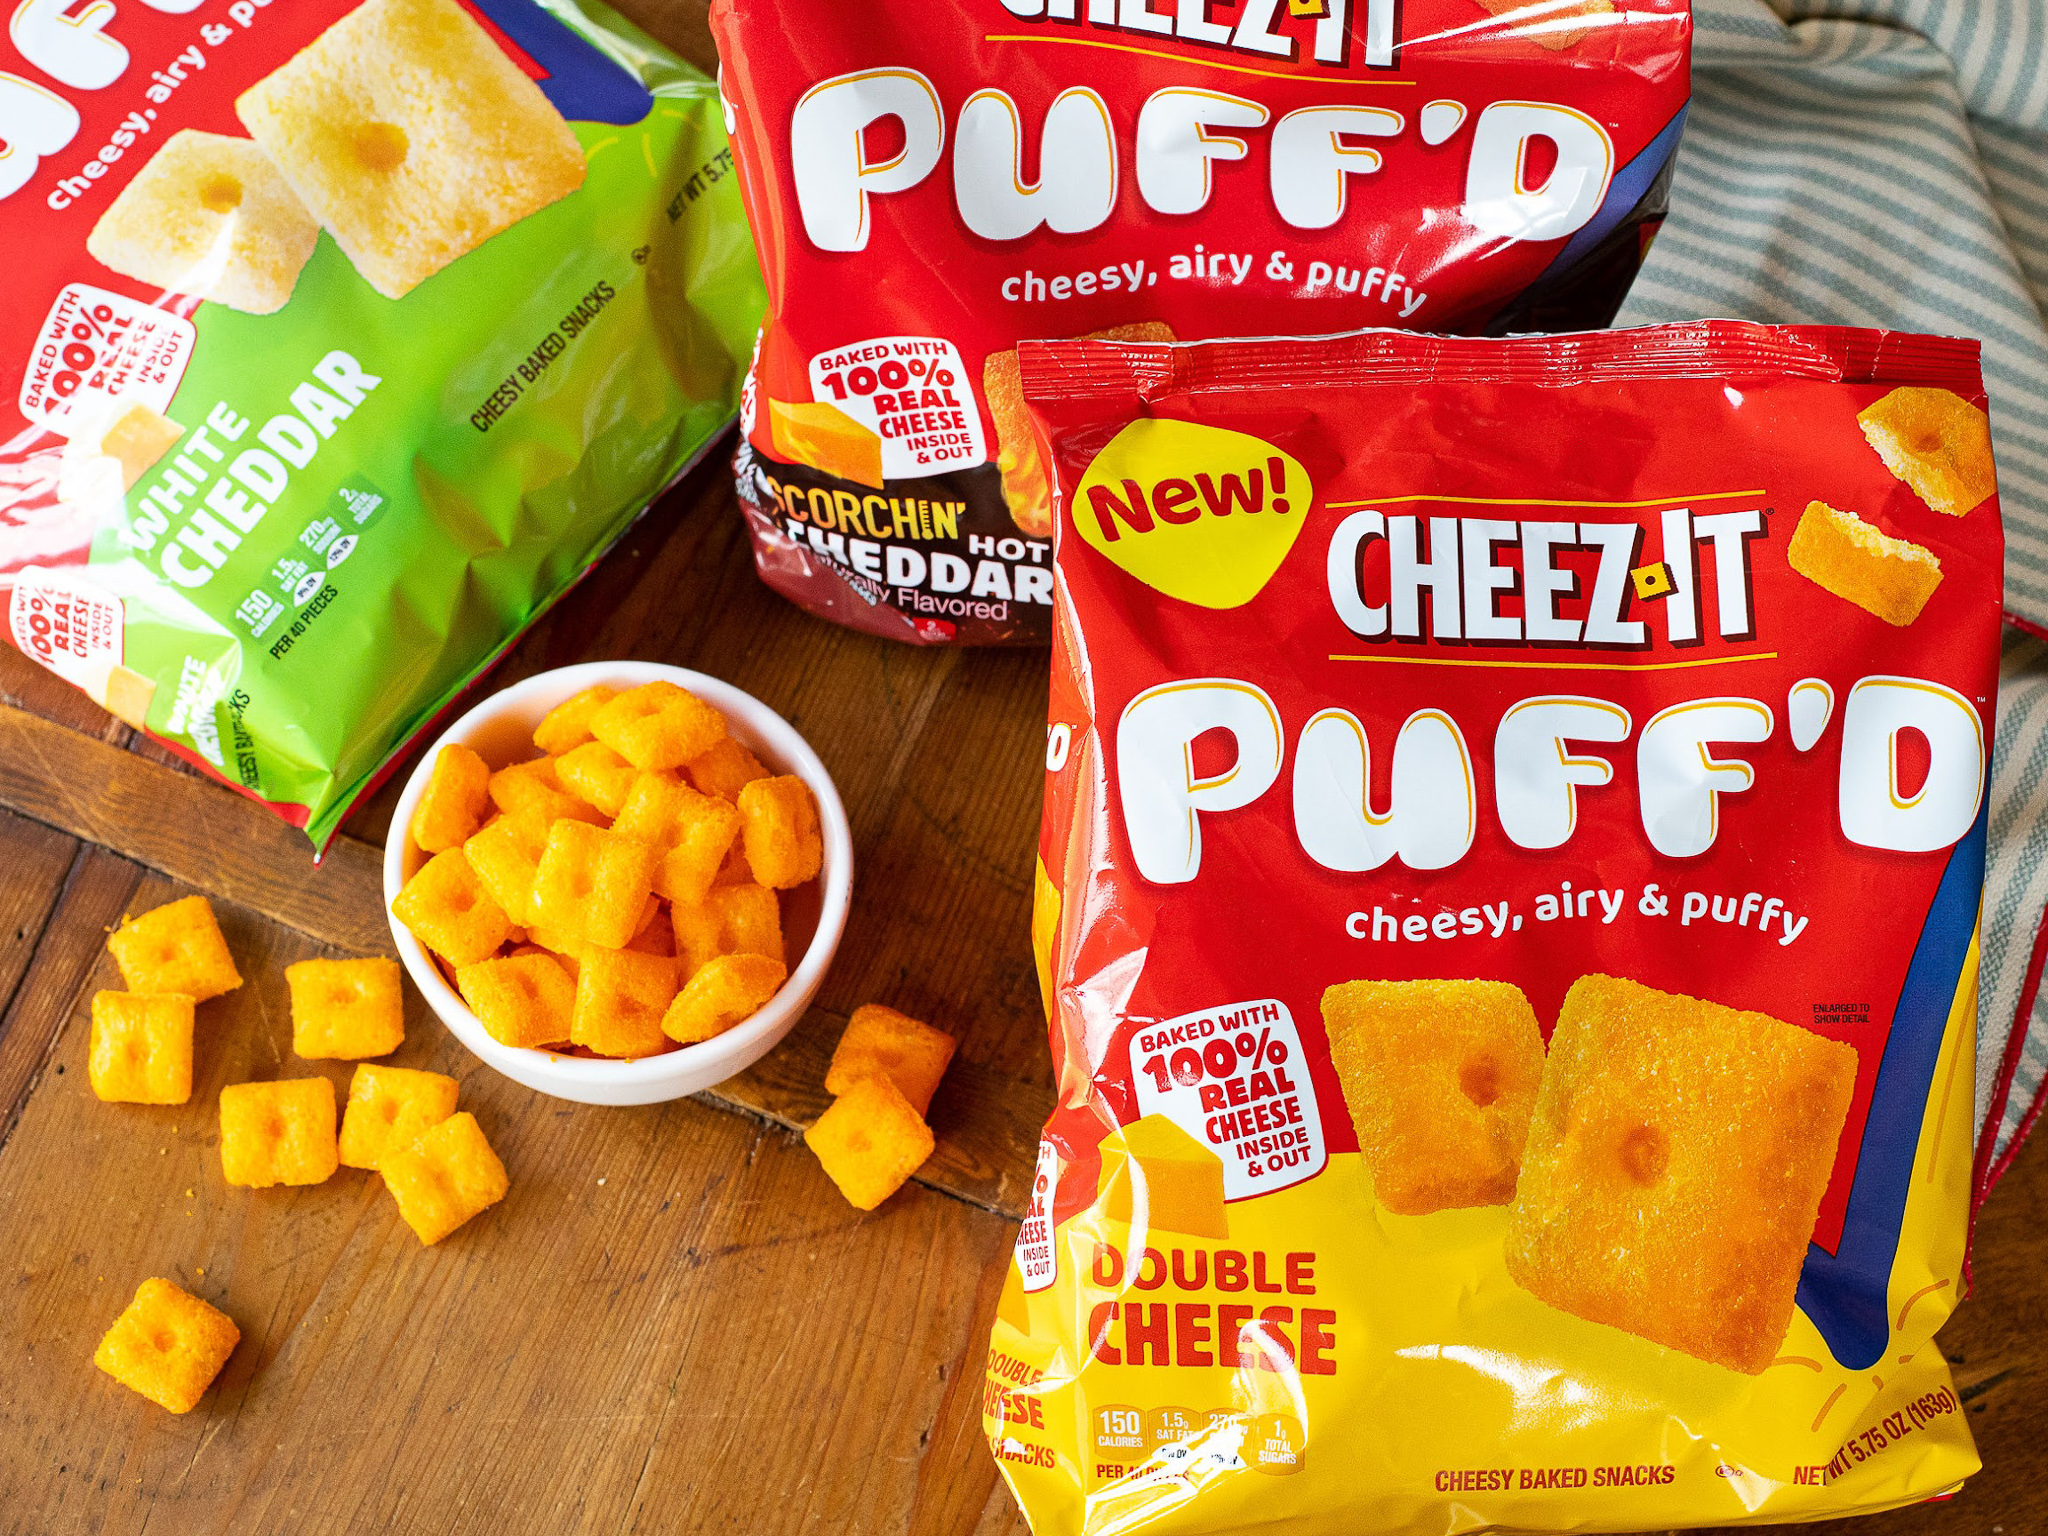 Cheez-It Puff’d Snacks Just $2 At Publix